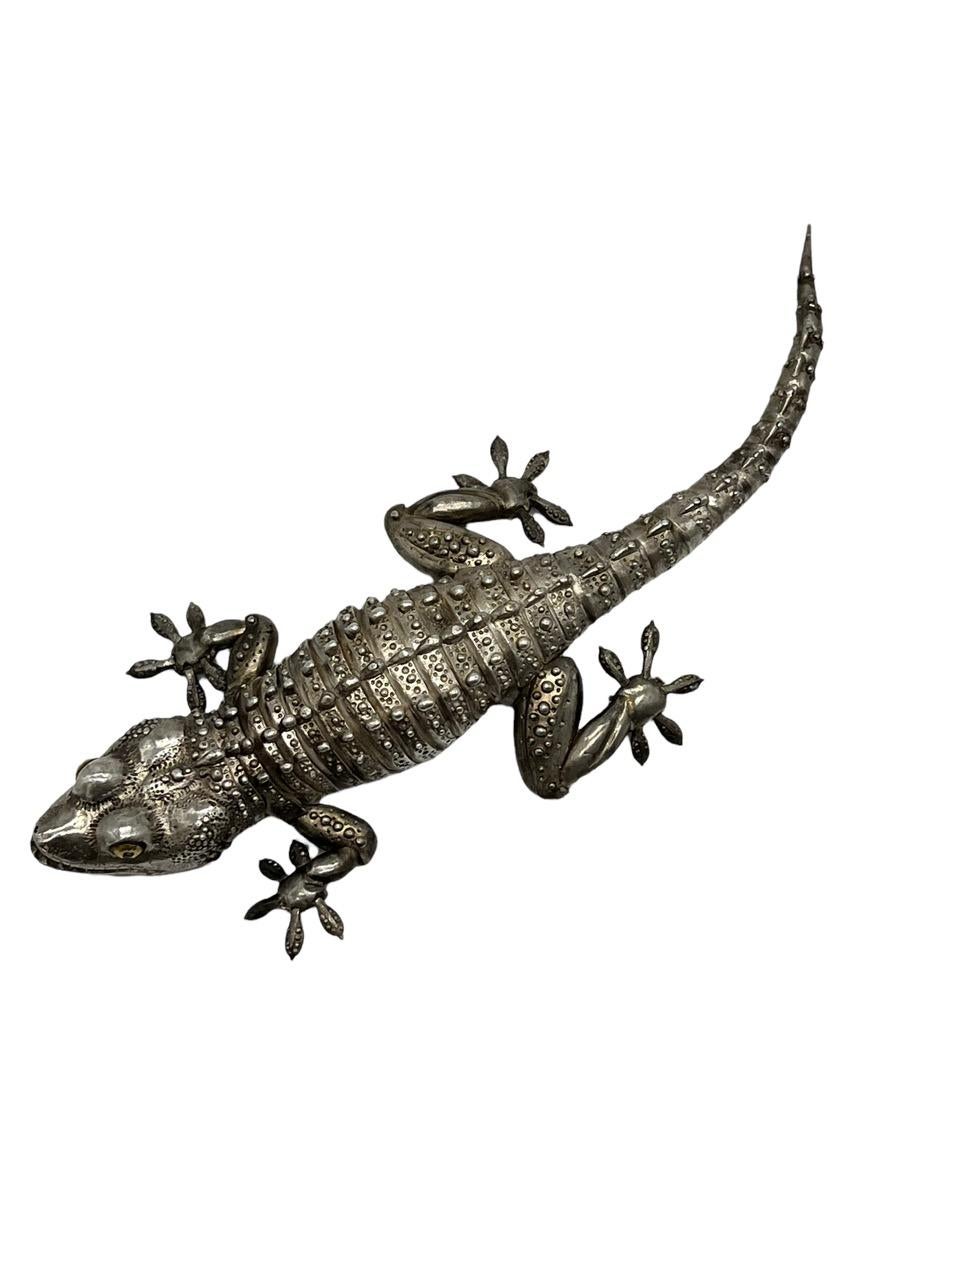 Oleg Konstantinov Fully Articulated Gecko Made of Sterling Silver For Sale 1